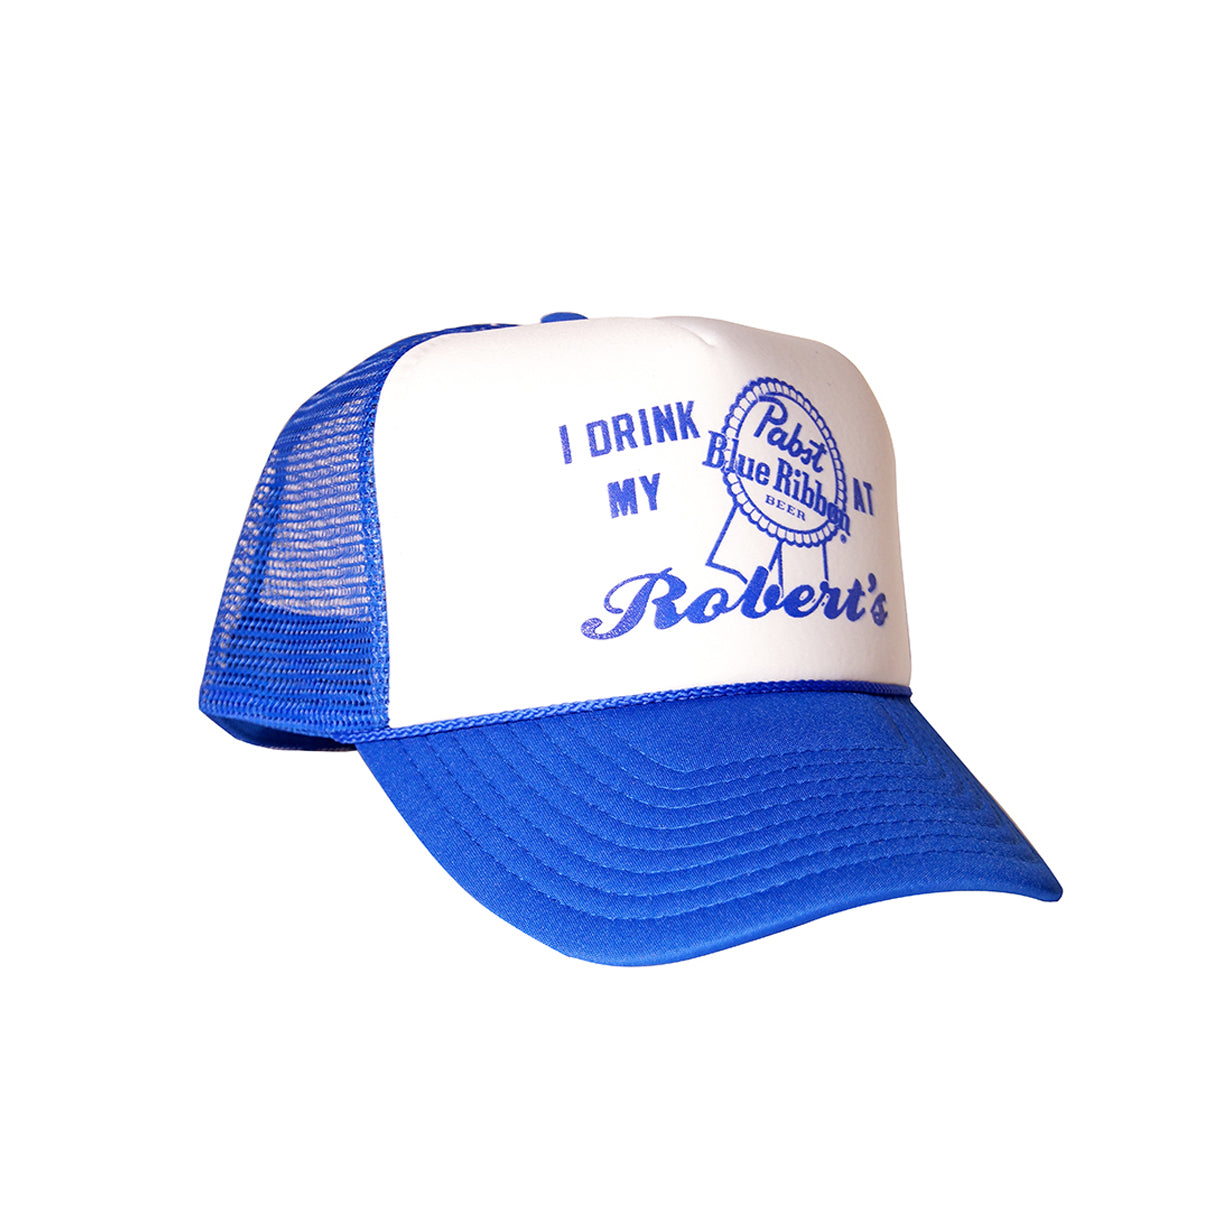 Robert's/PBR Trucker Hat